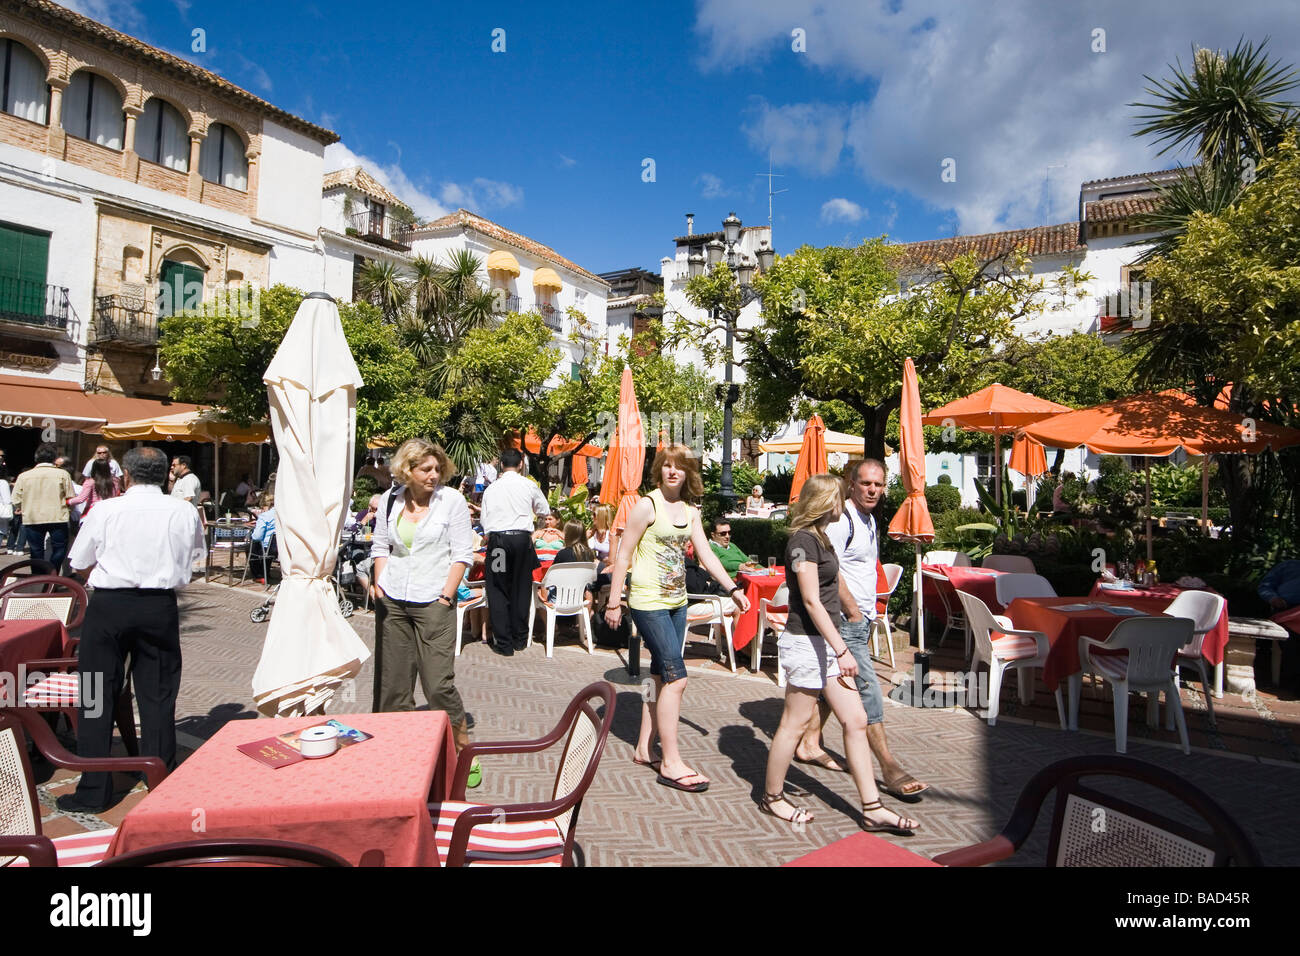 Marbella Malaga Province Costa del Sol Spain Tourists enjoying the sunshine in the Orange Square in the old town Stock Photo